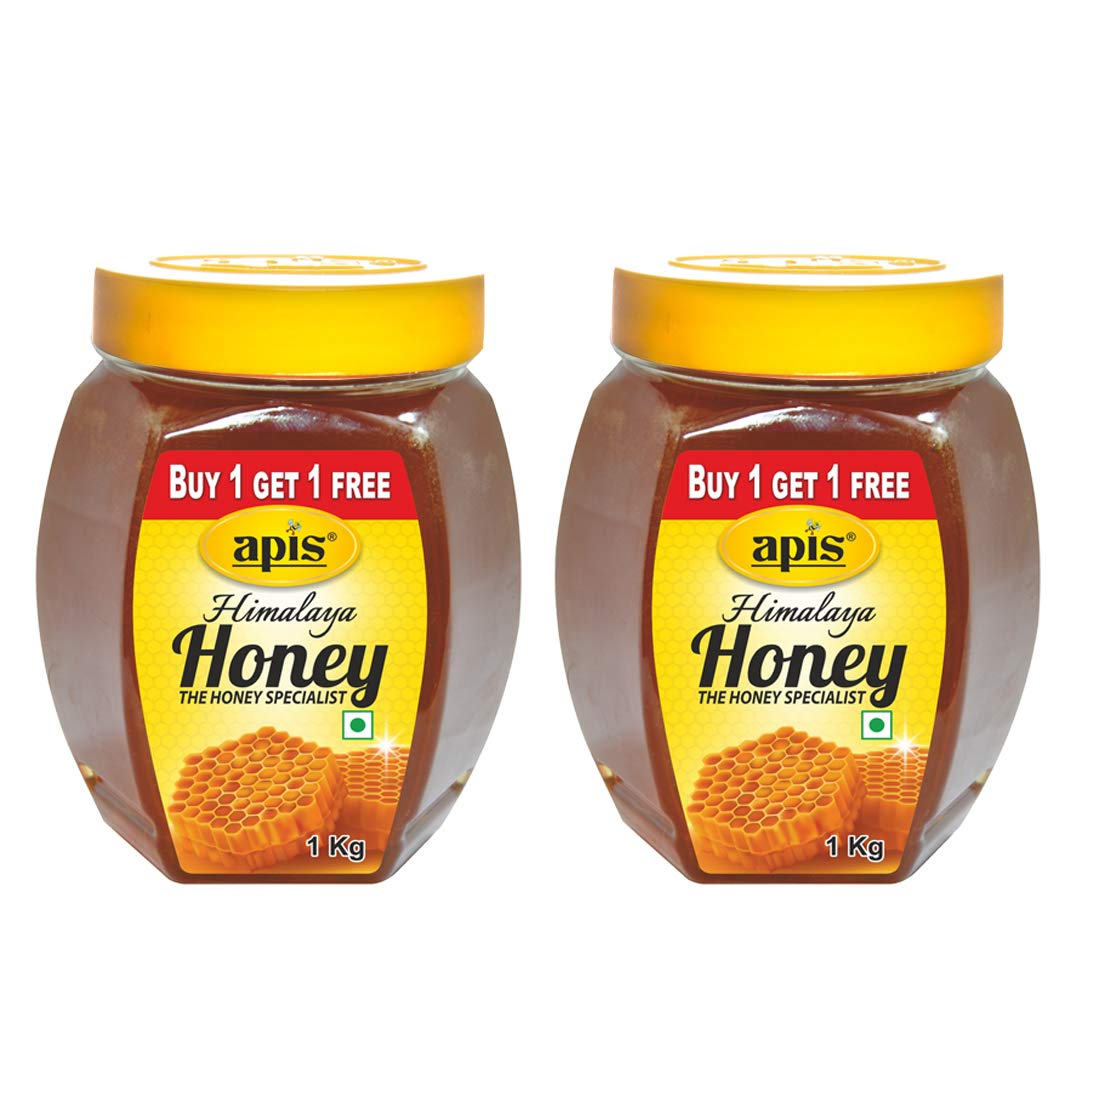 Himalaya Honey, Apis, 1kg